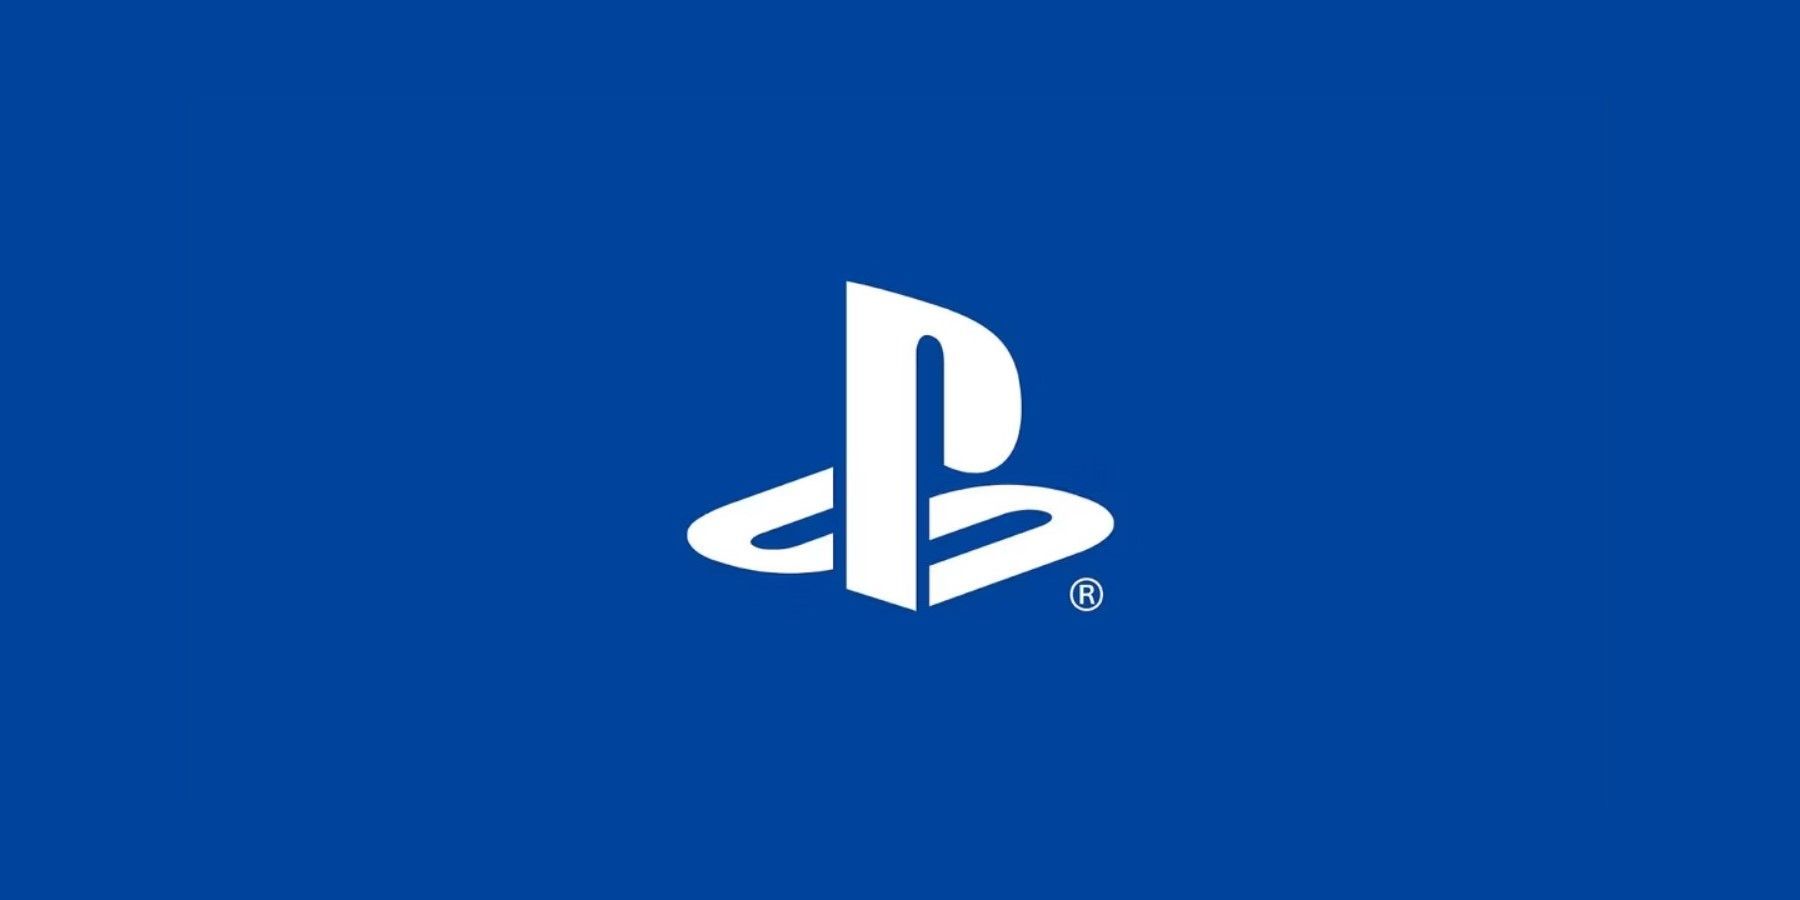 PlayStation Showcase 2021: Thursday, September 9 